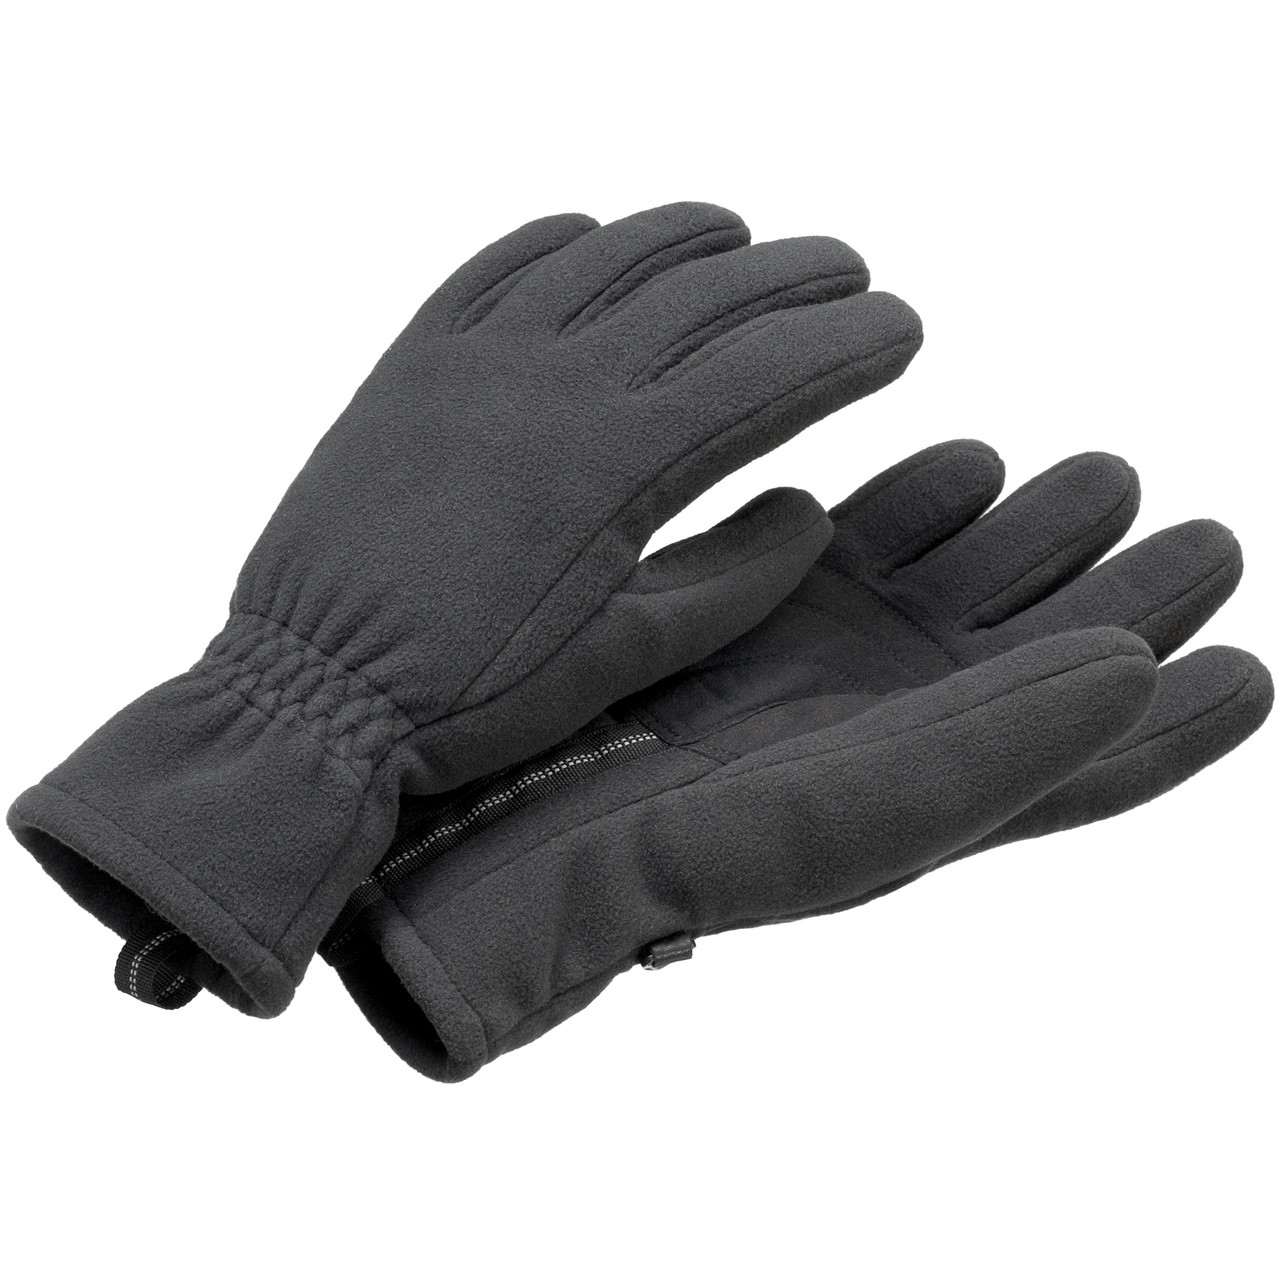 Windpro 2 Gloves Mens Black